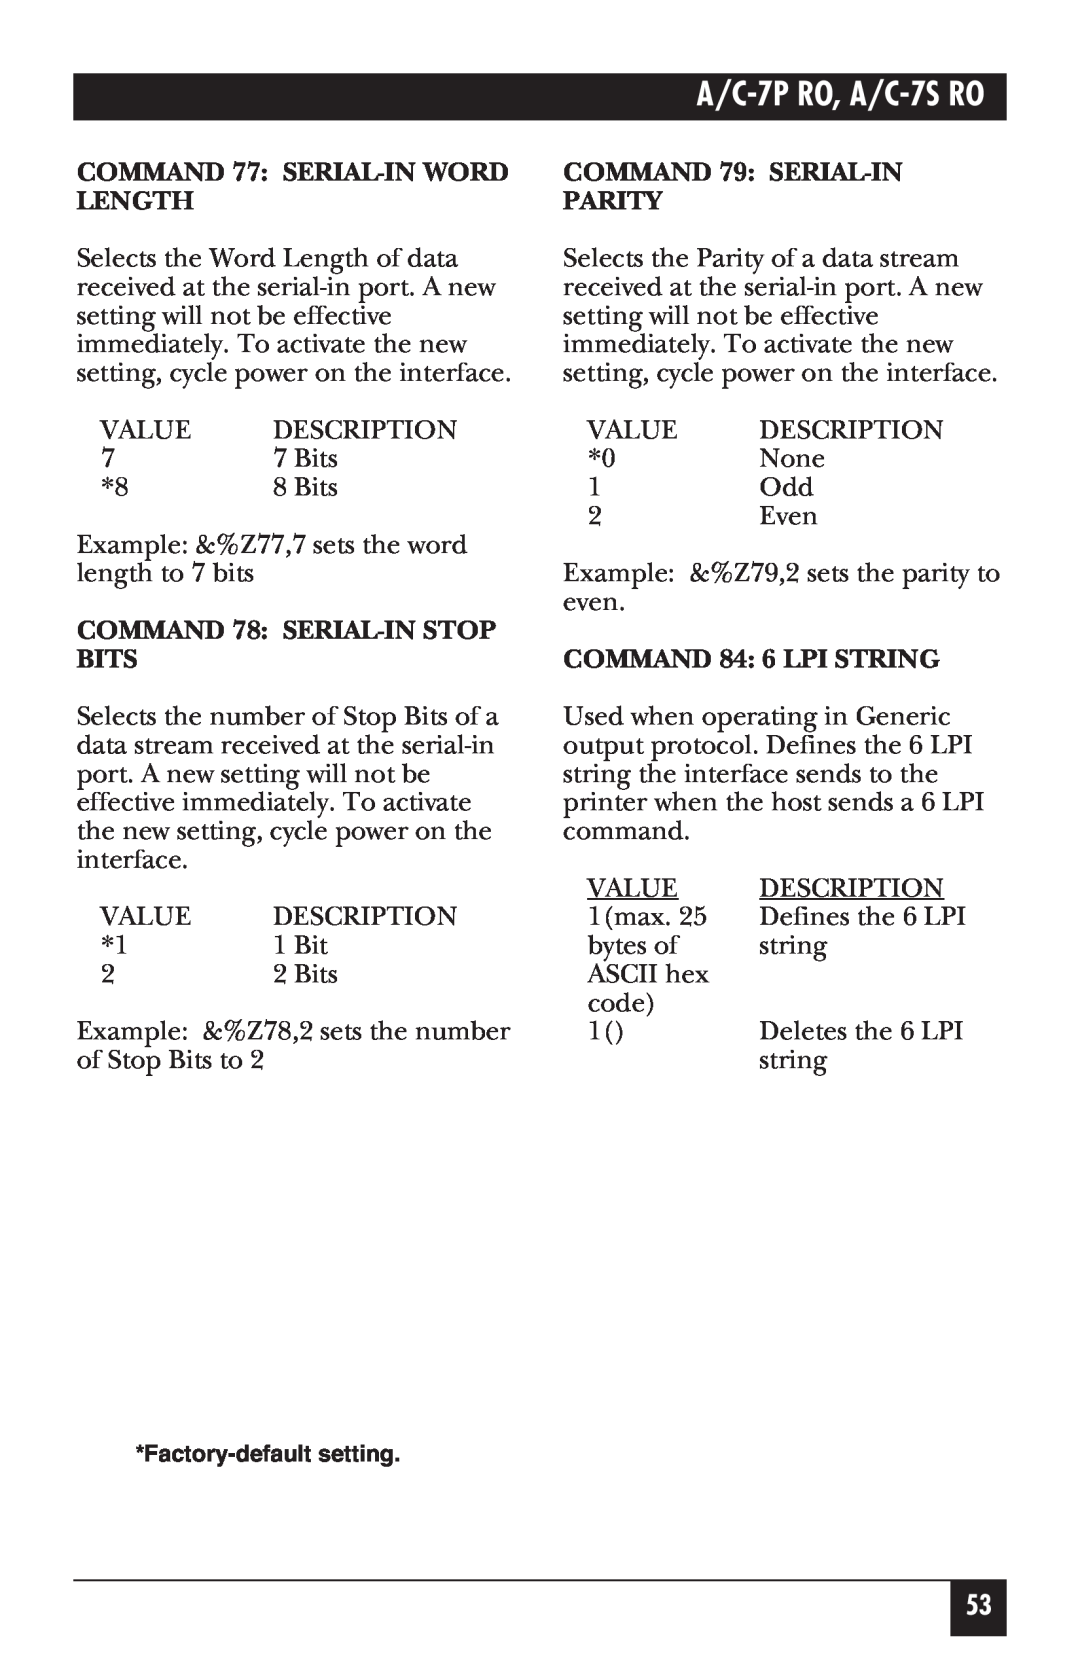 Black Box A/C-7S RO manual COMMAND 77 SERIAL-IN WORD LENGTH, COMMAND 78 SERIAL-IN STOP BITS, COMMAND 79 SERIAL-IN PARITY 